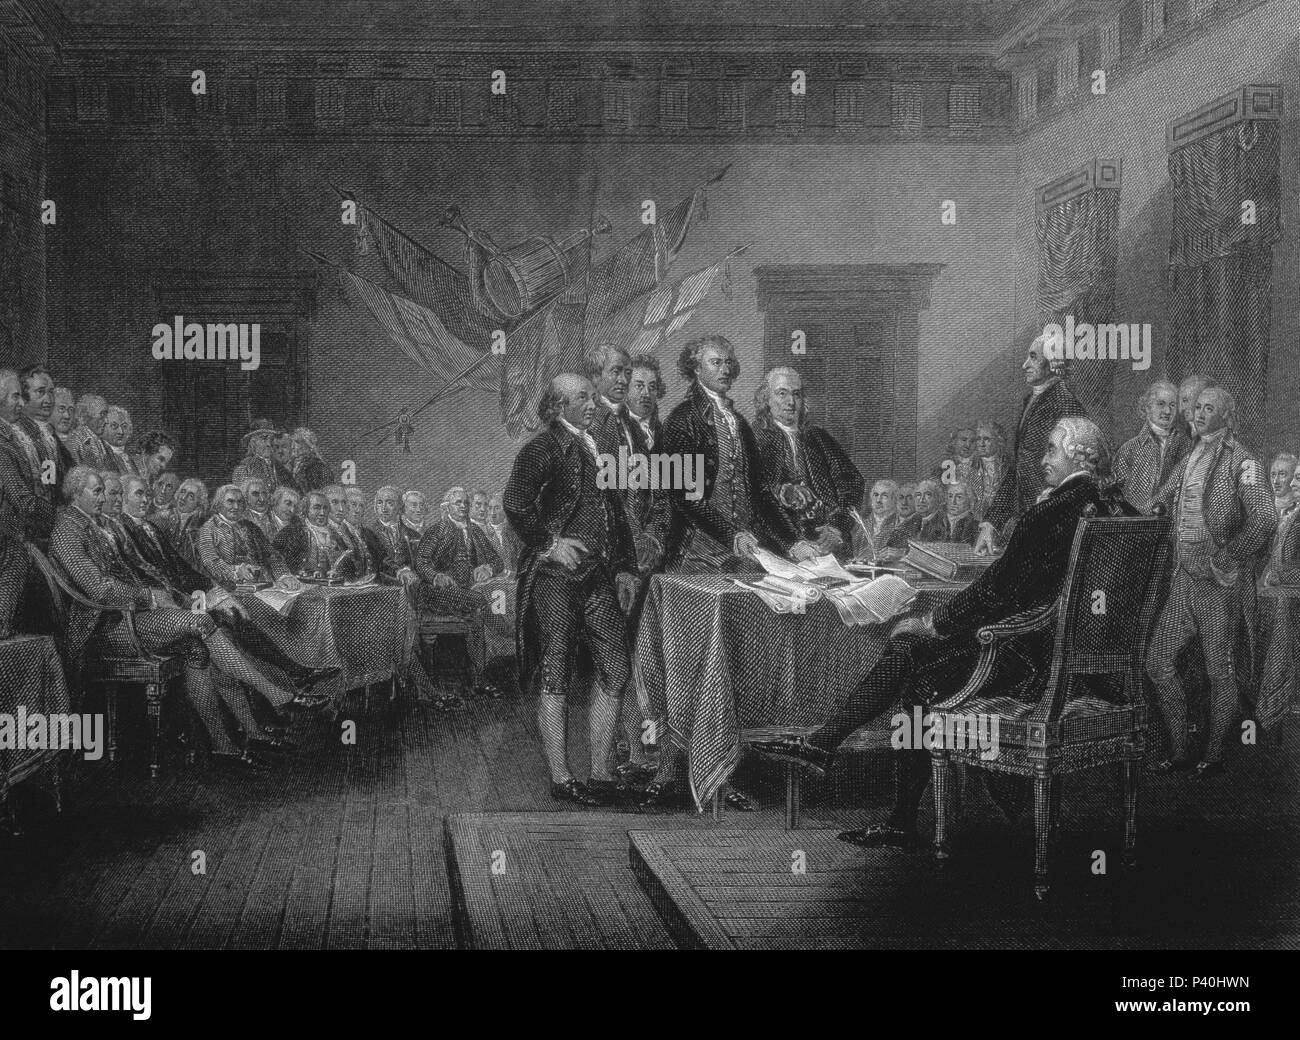 Signing the Declaration of Independence, 4th July 1776 - 1870 - engraving. Author: John Trumbull (1756-1843). Also known as: FIRMA DEL ACTA DE INDEPENDENCIA DE ESTADOS UNIDOS EL 4 JULIO 1776. Stock Photo